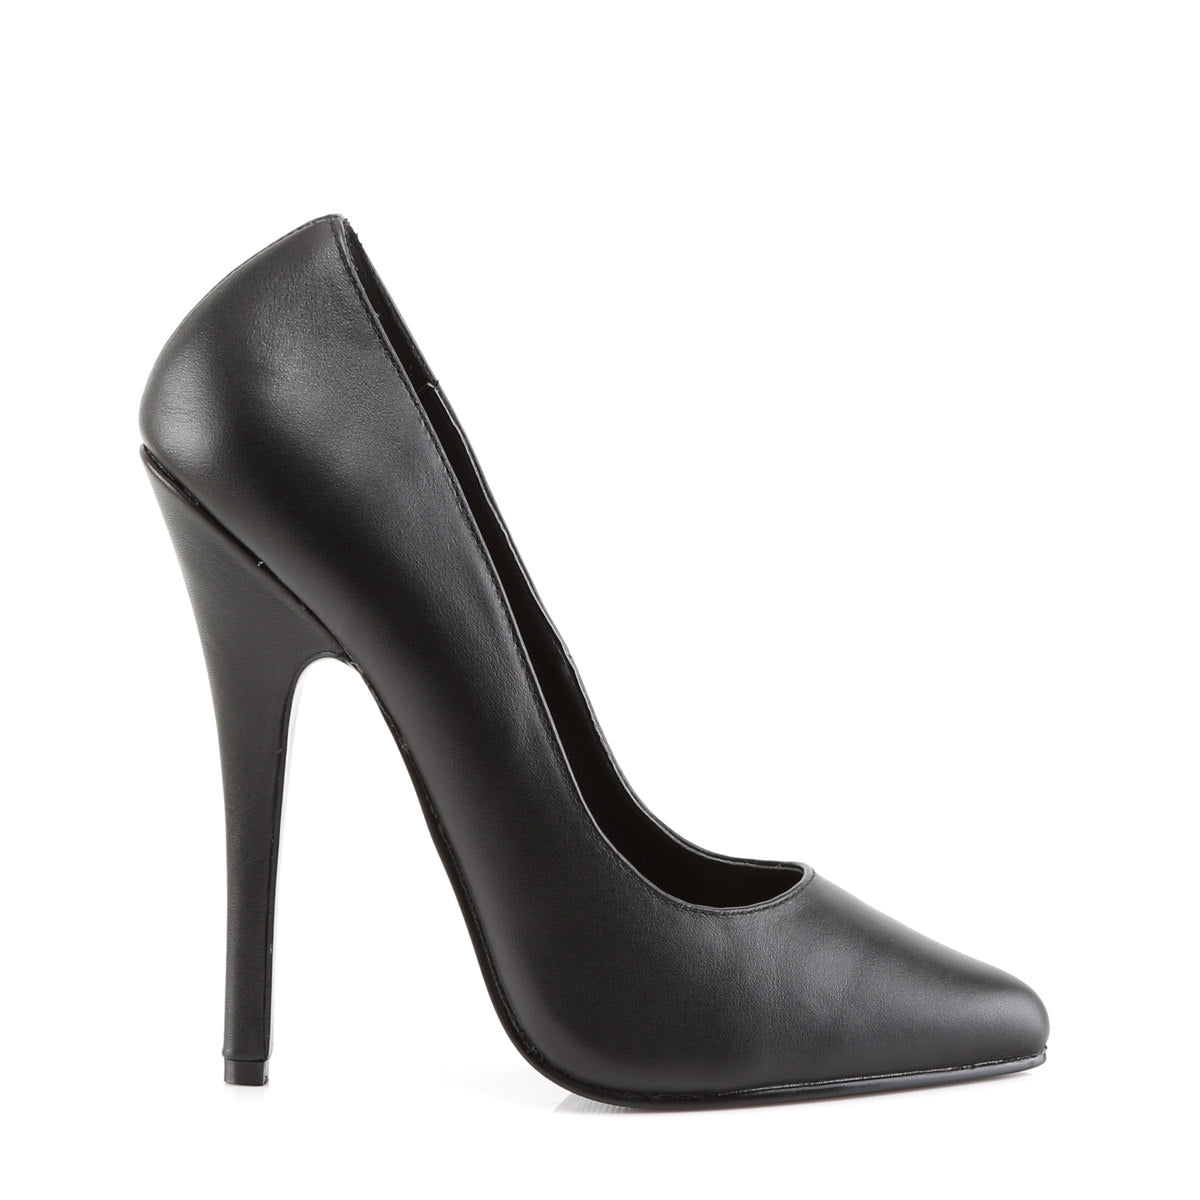 6 Inch Heel DOMINA-420 Black Leather